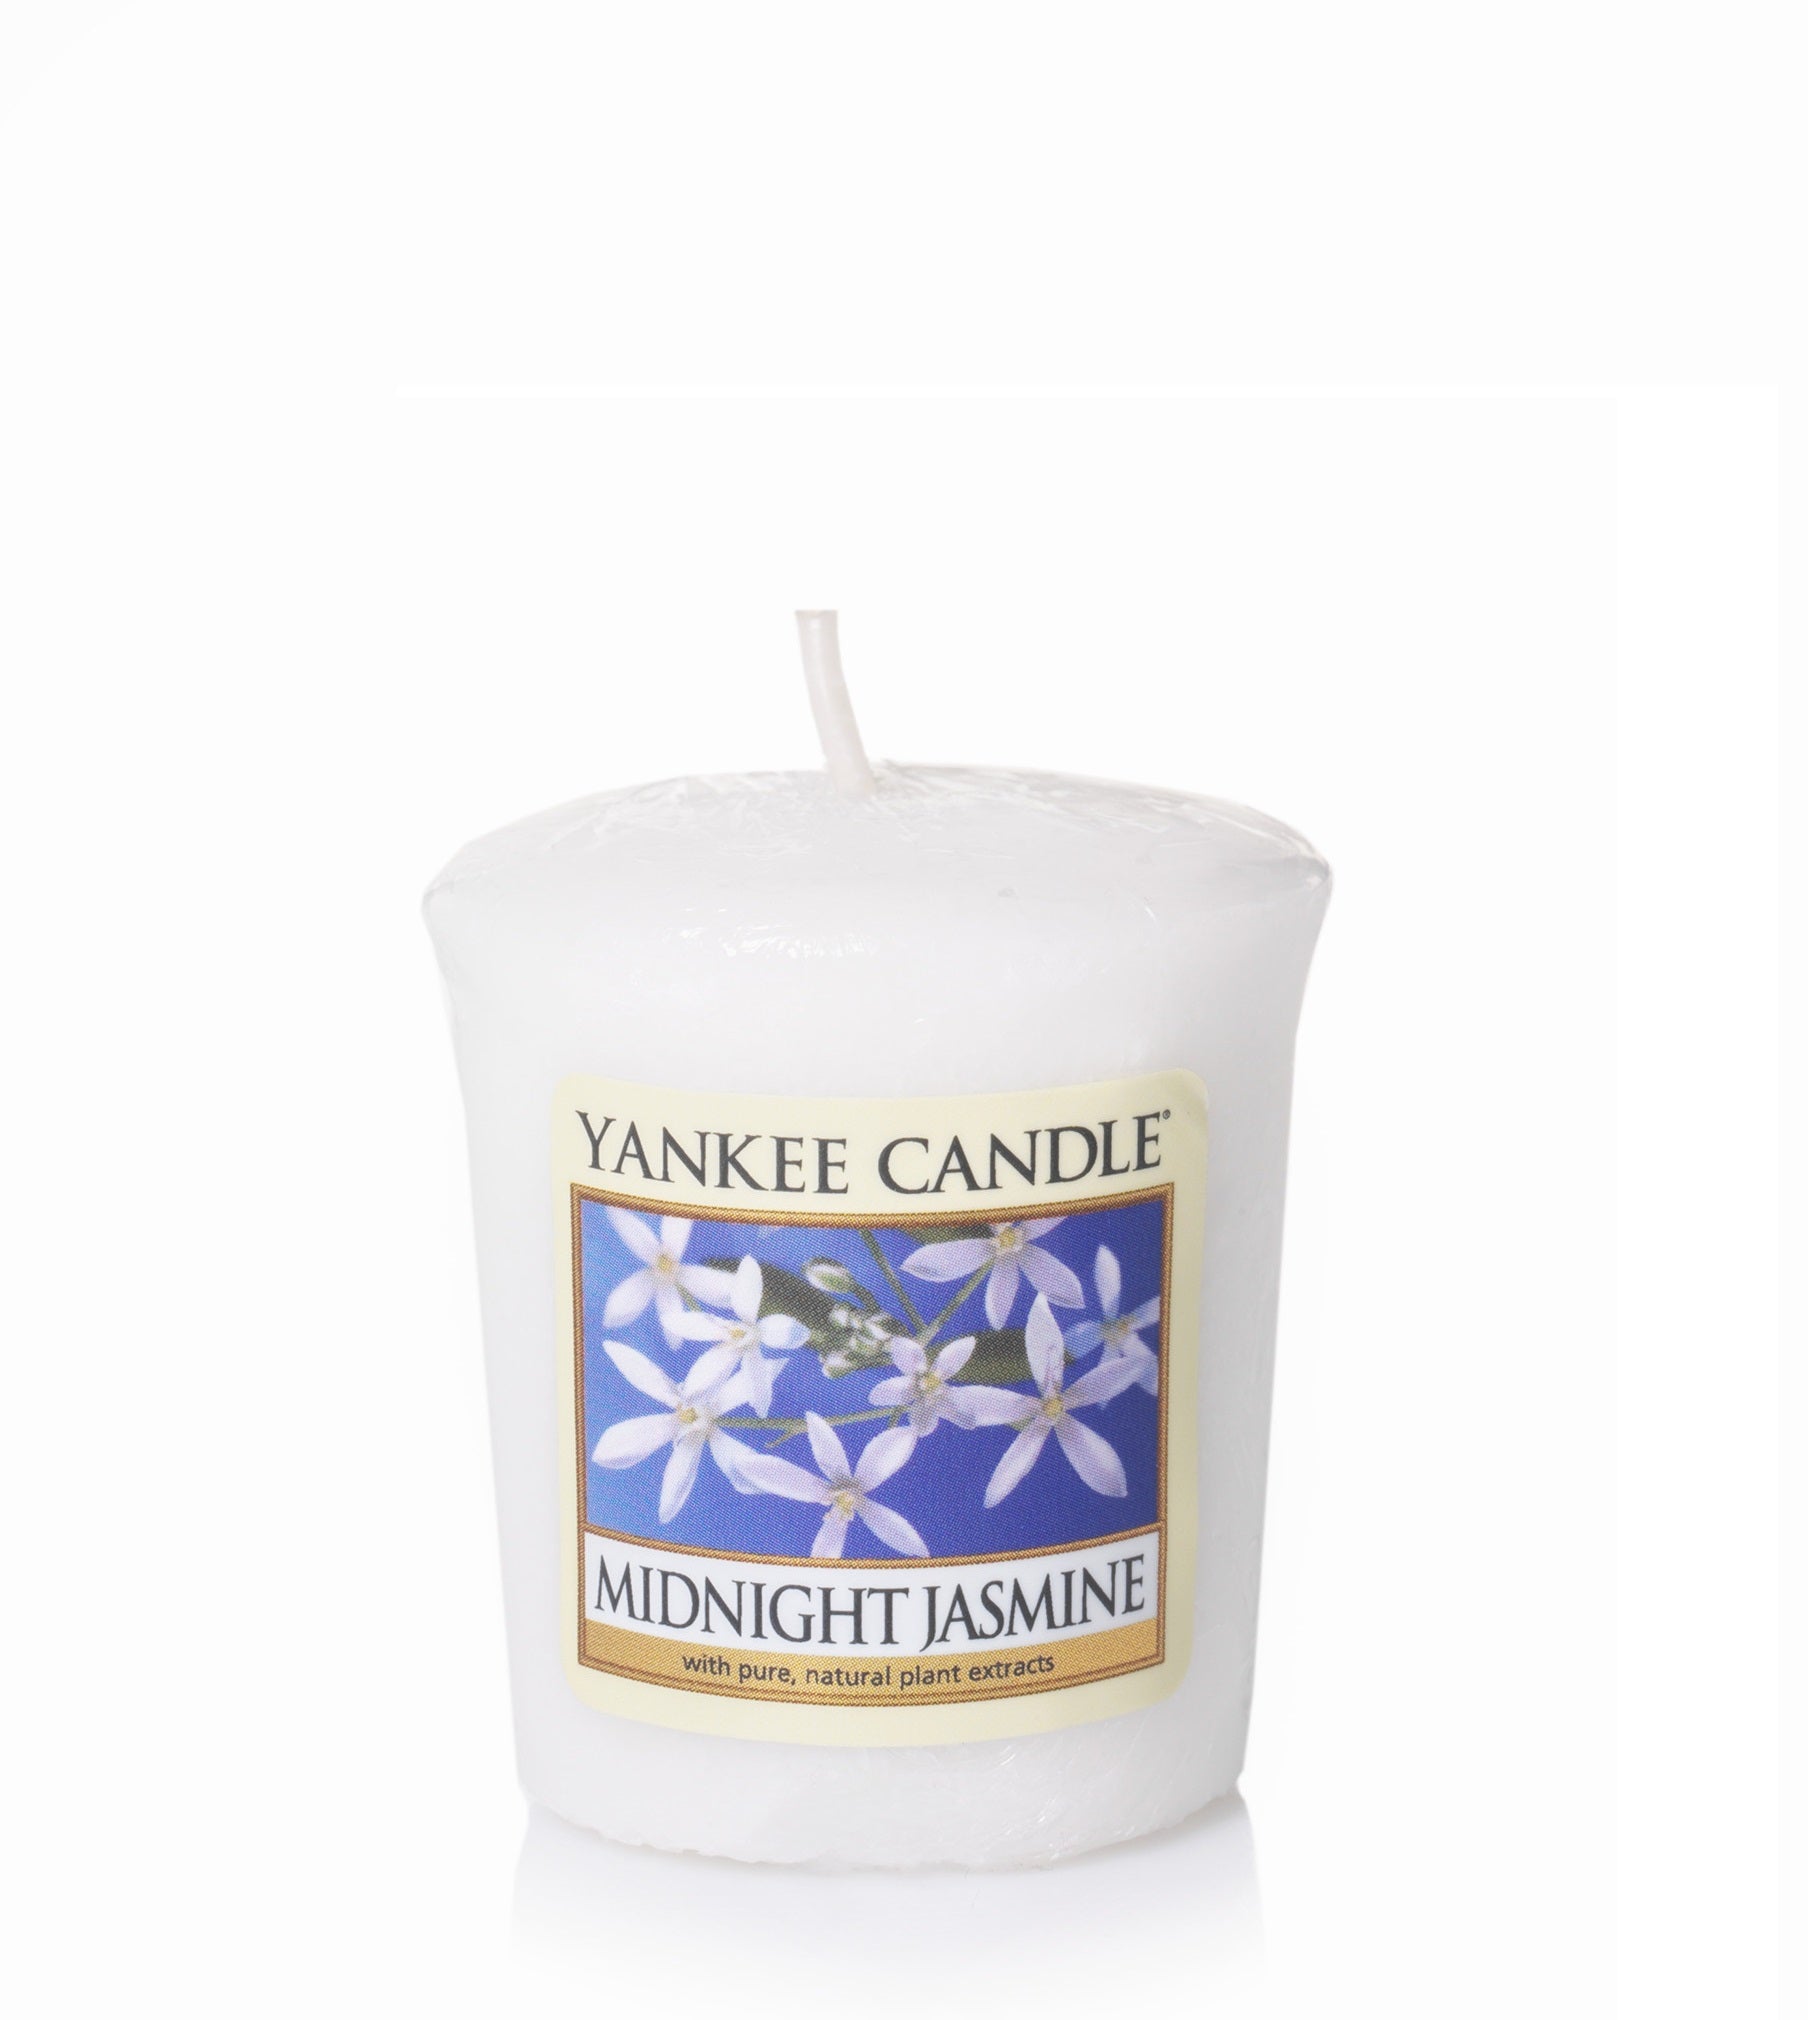 MIDNIGHT JASMINE -Yankee Candle- Candela Sampler